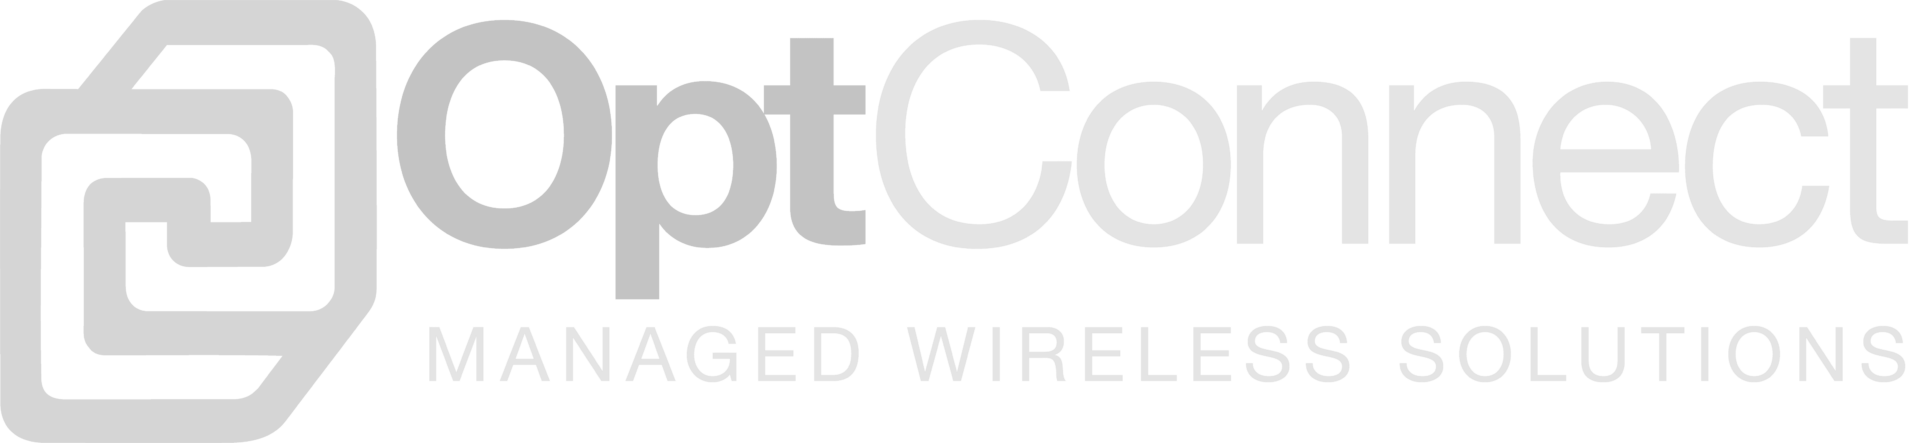 OptConnect Logo